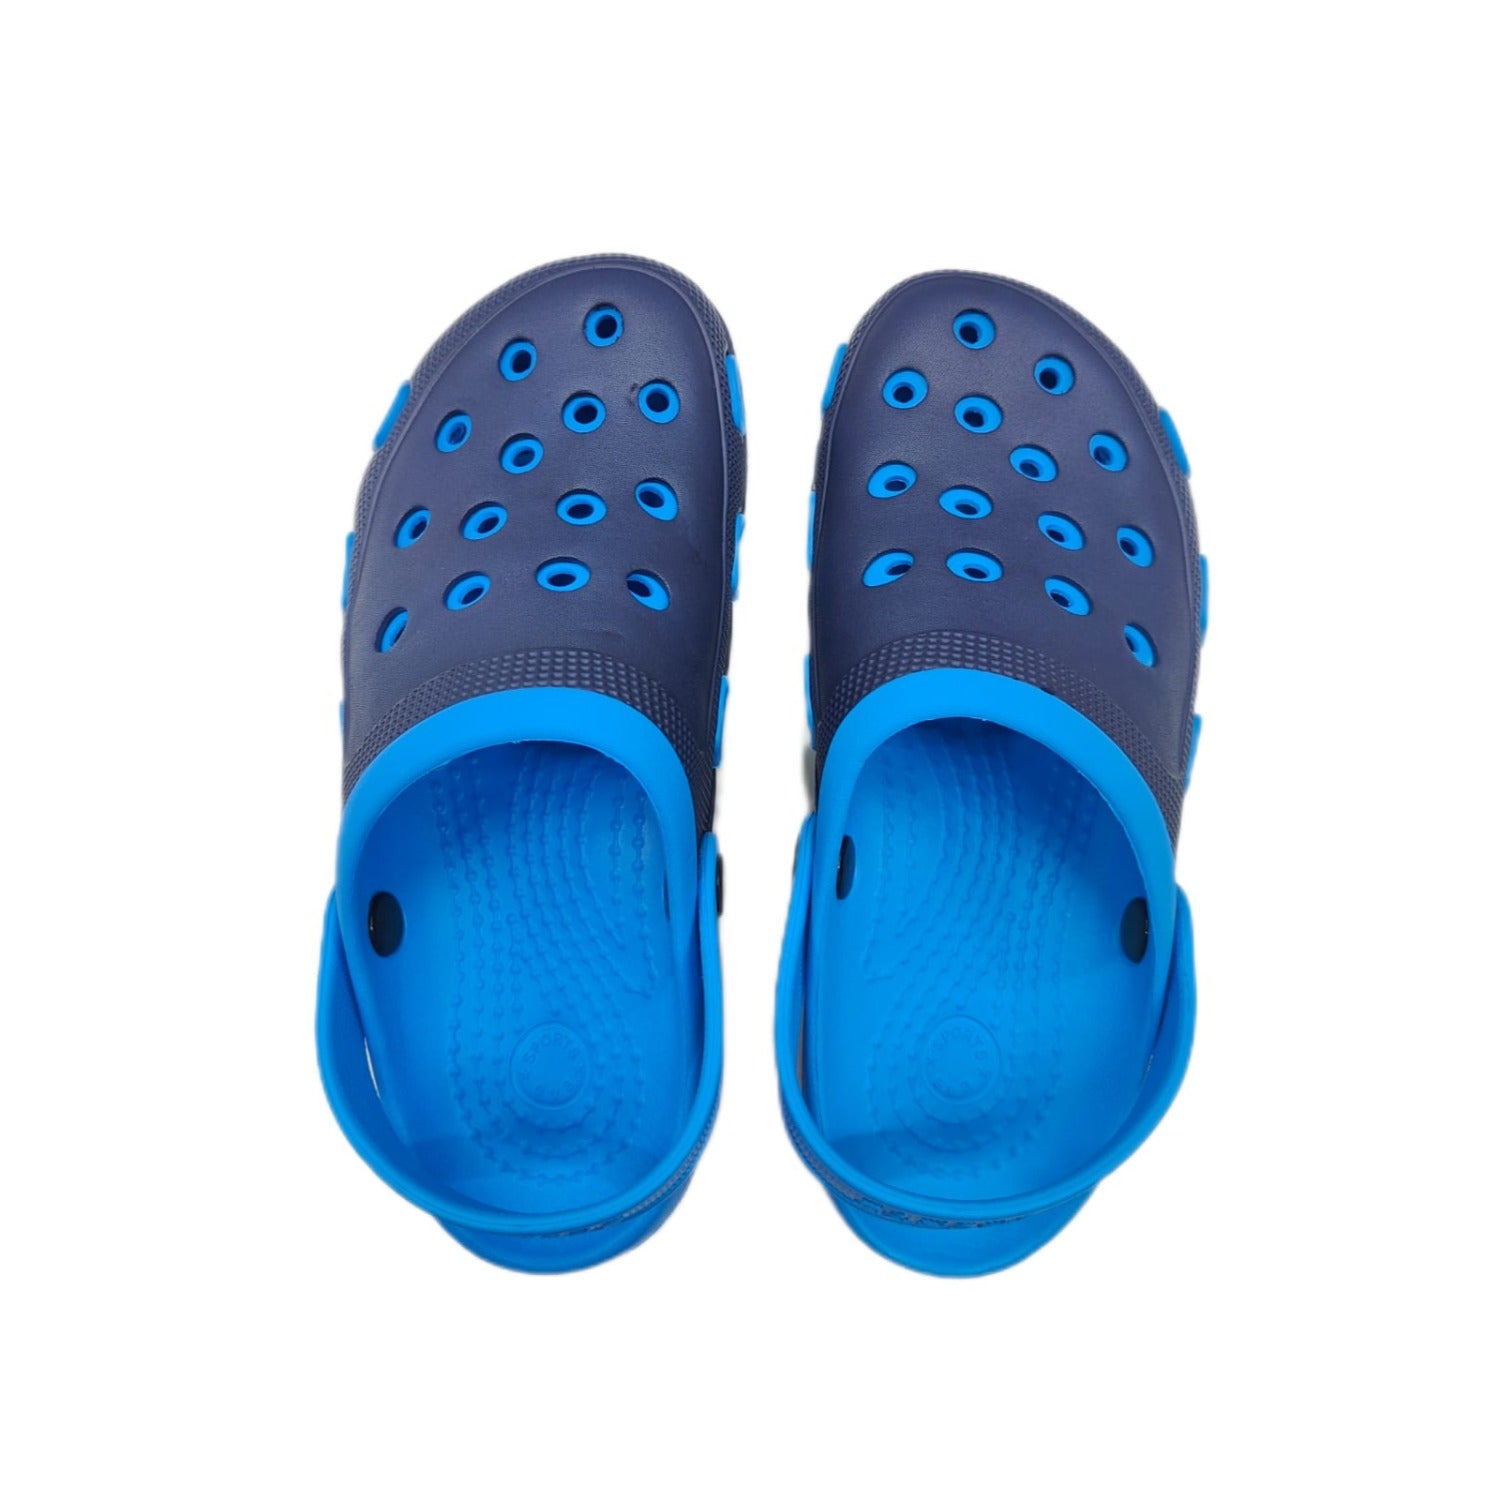 Buy Gokyo Clog Sandal | Clog Sandals at Gokyo Outdoor Clothing & Gear